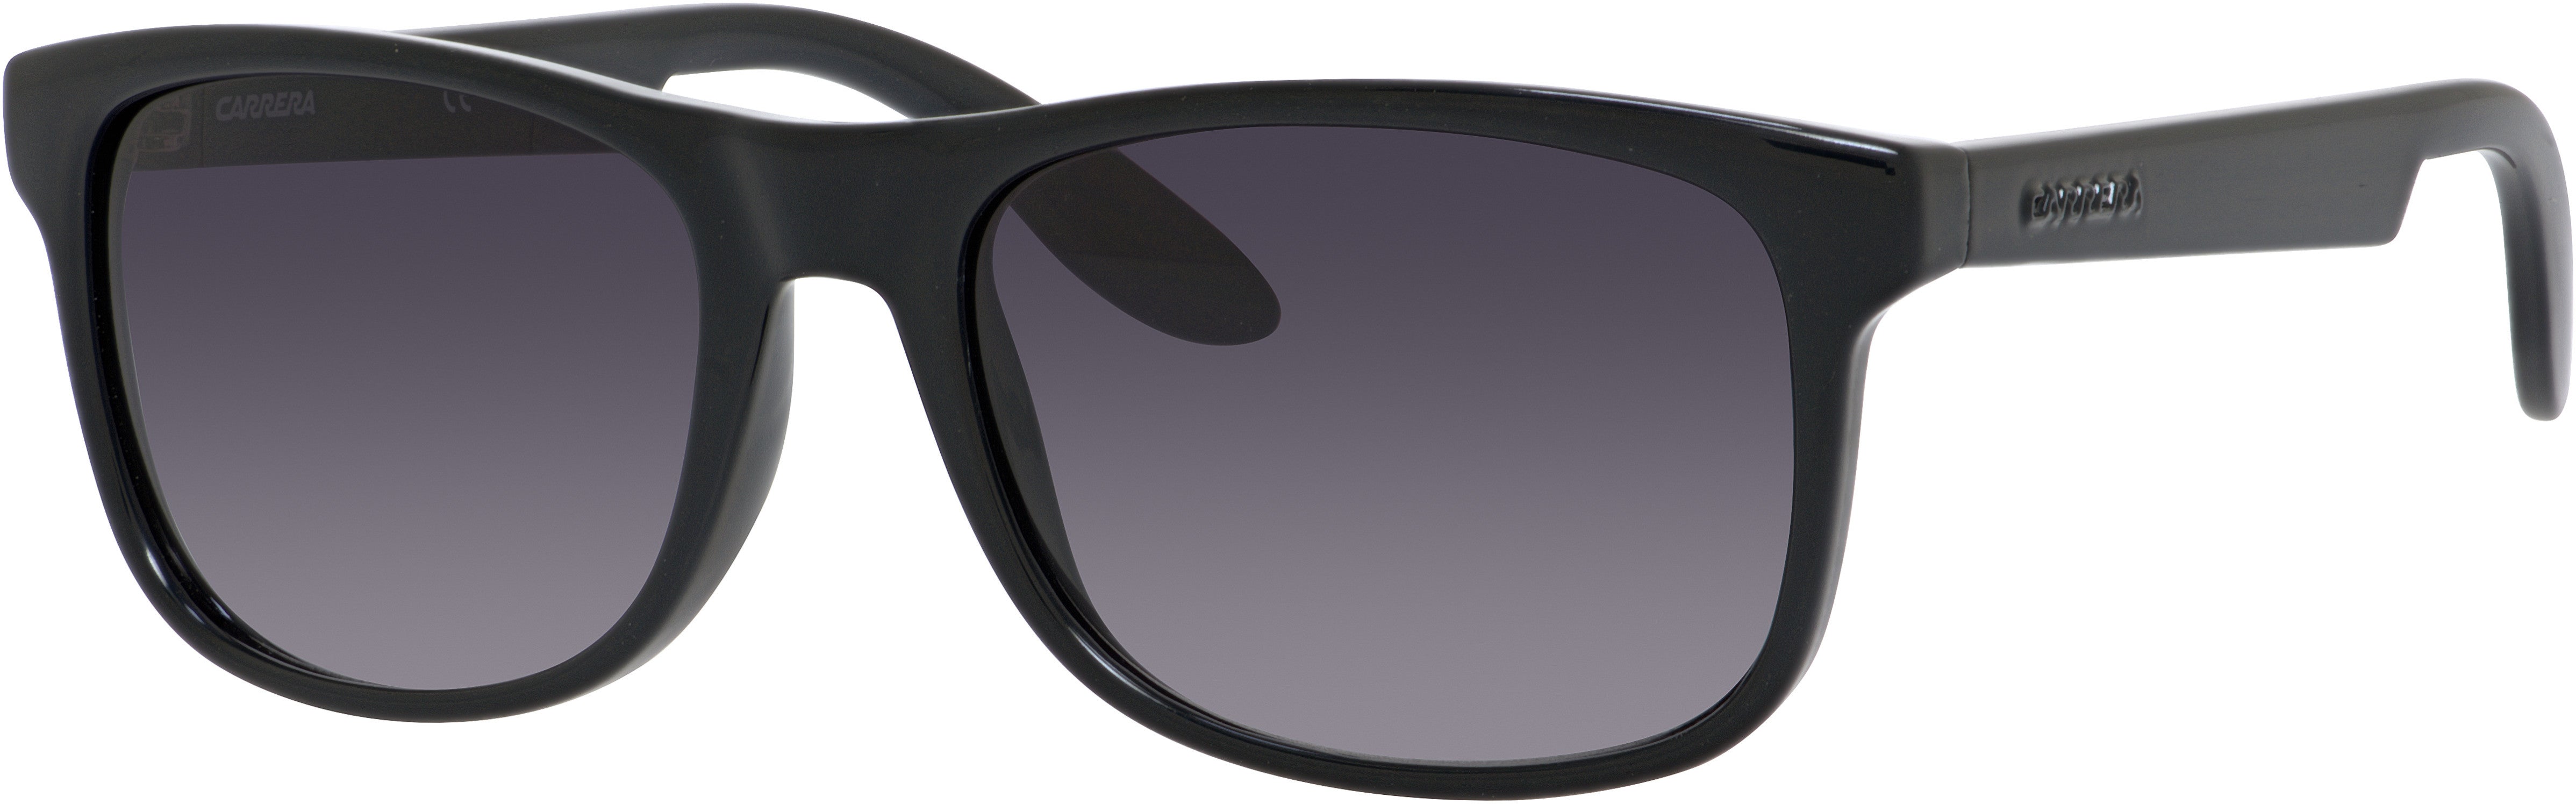 Carrera Carrerino 17 Square Sunglasses 0D28-0D28  Shiny Black (JJ Gray Gradient)